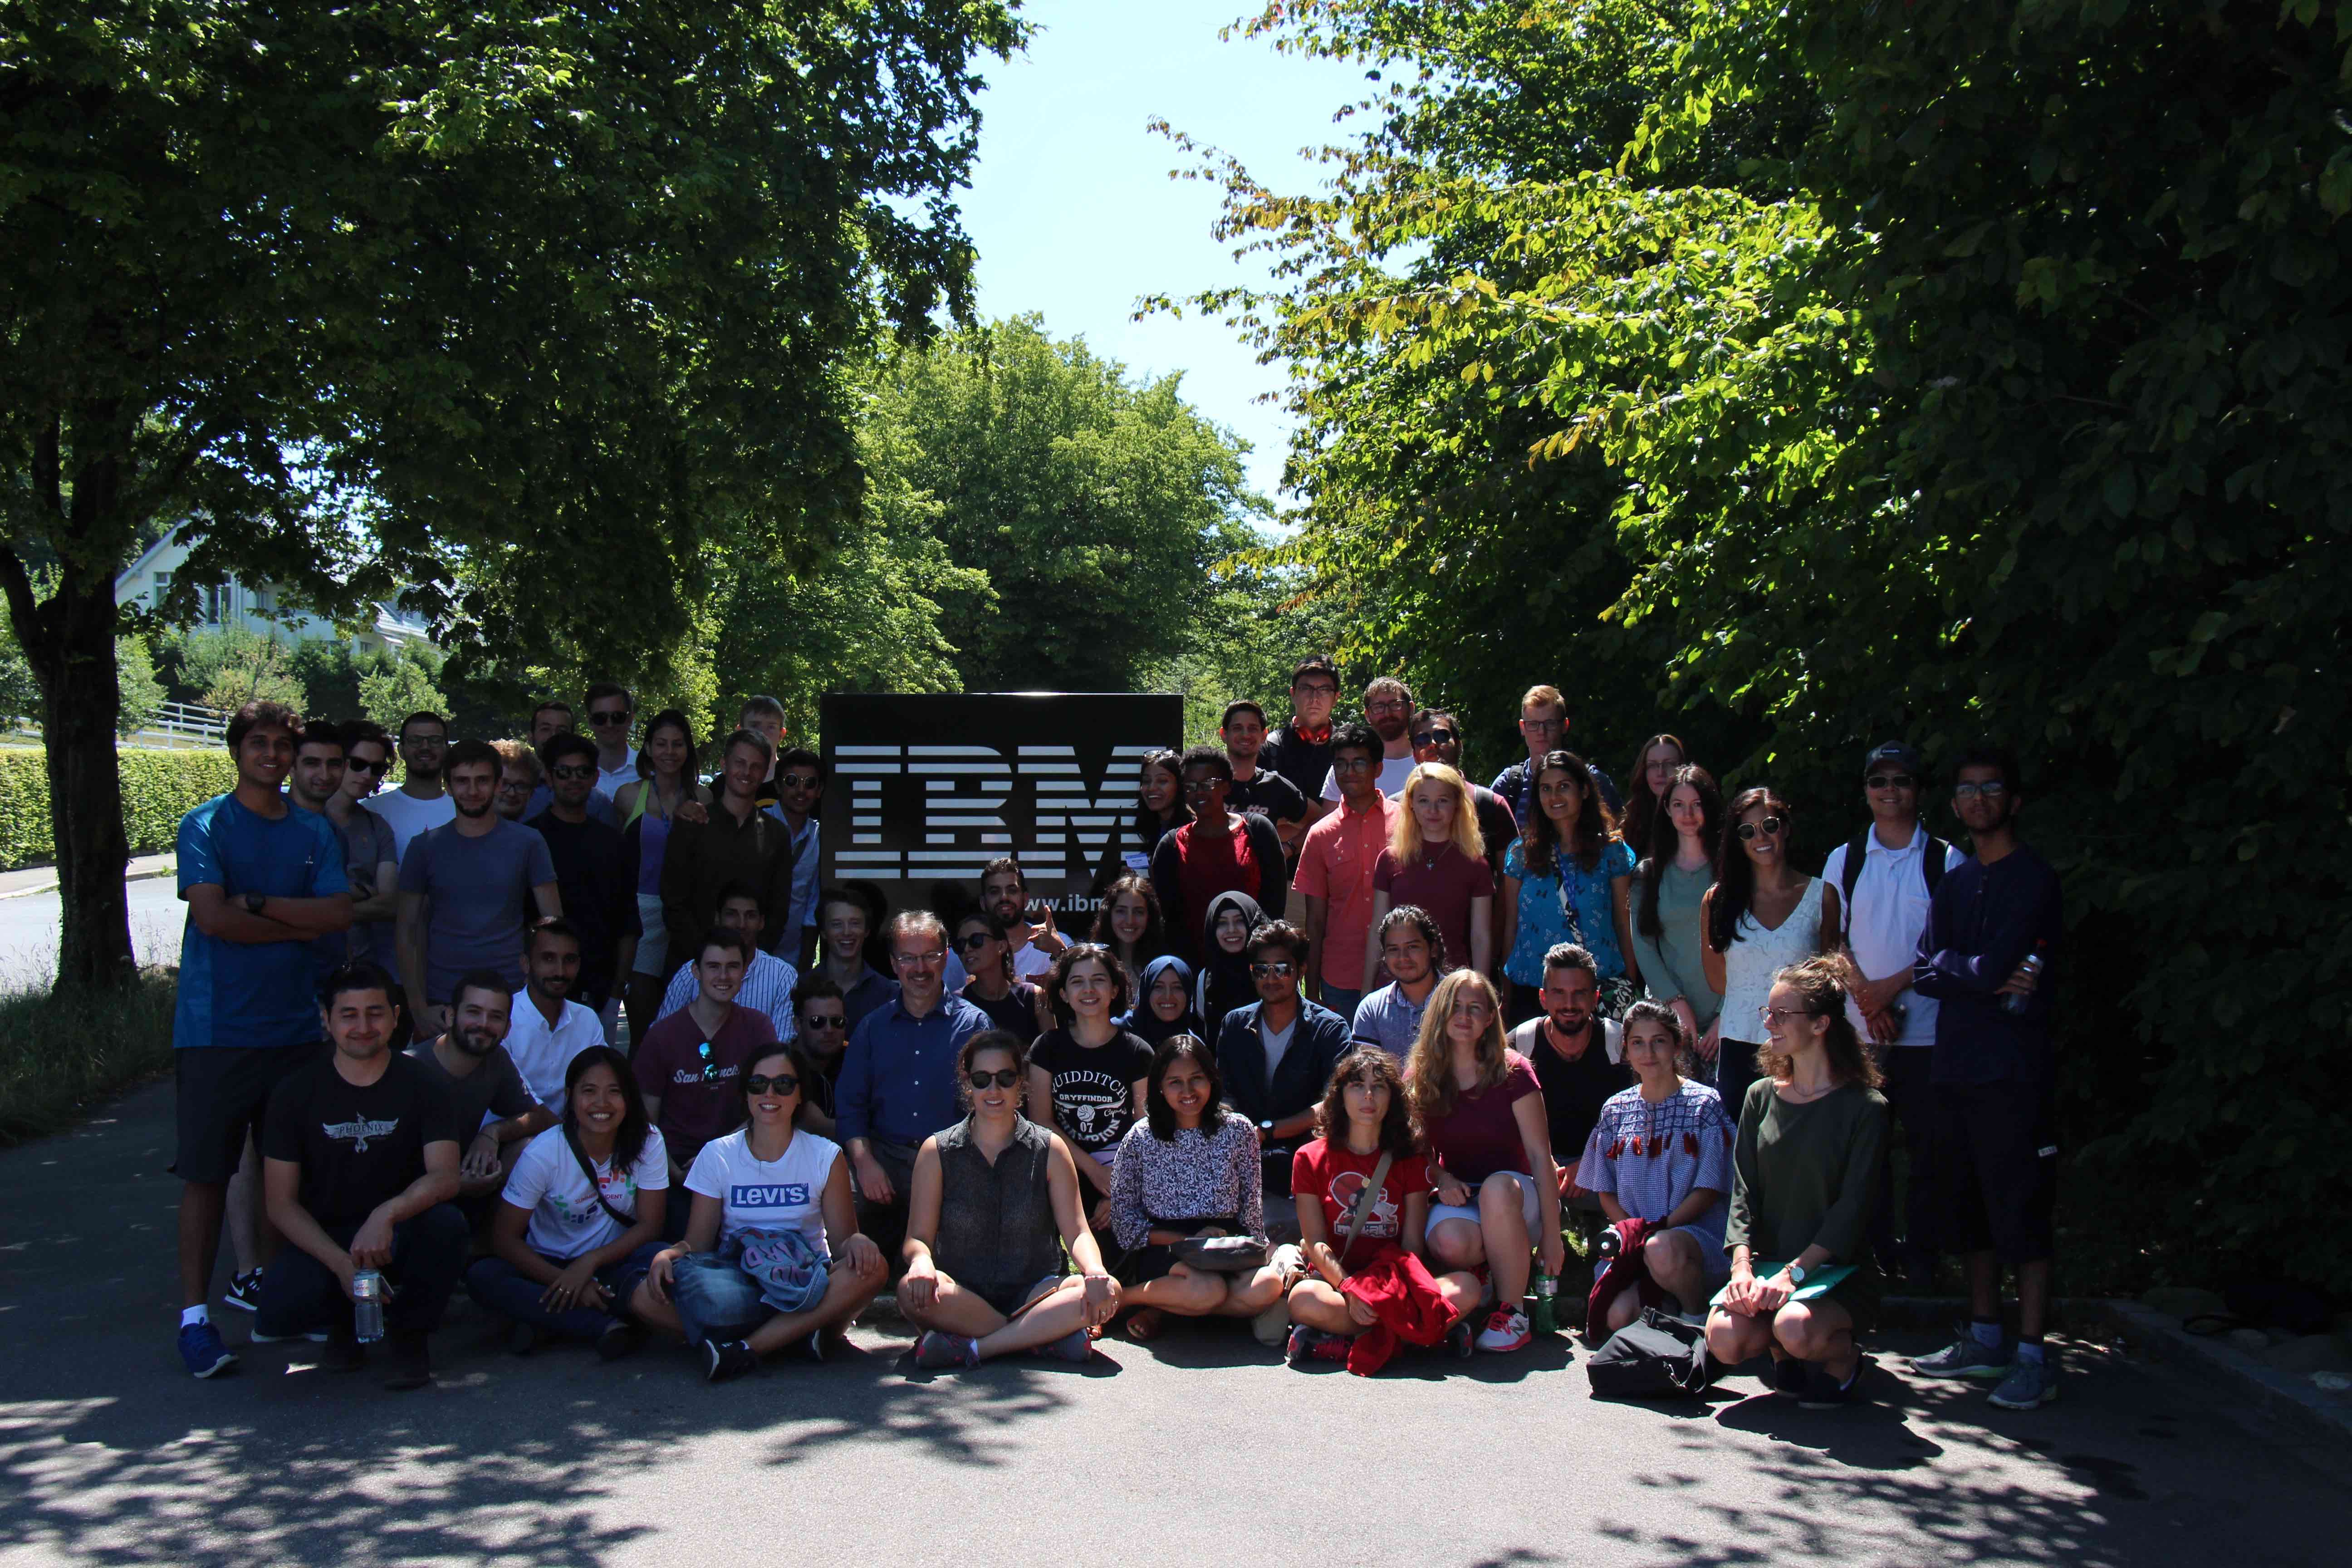 IBM thinklab visit